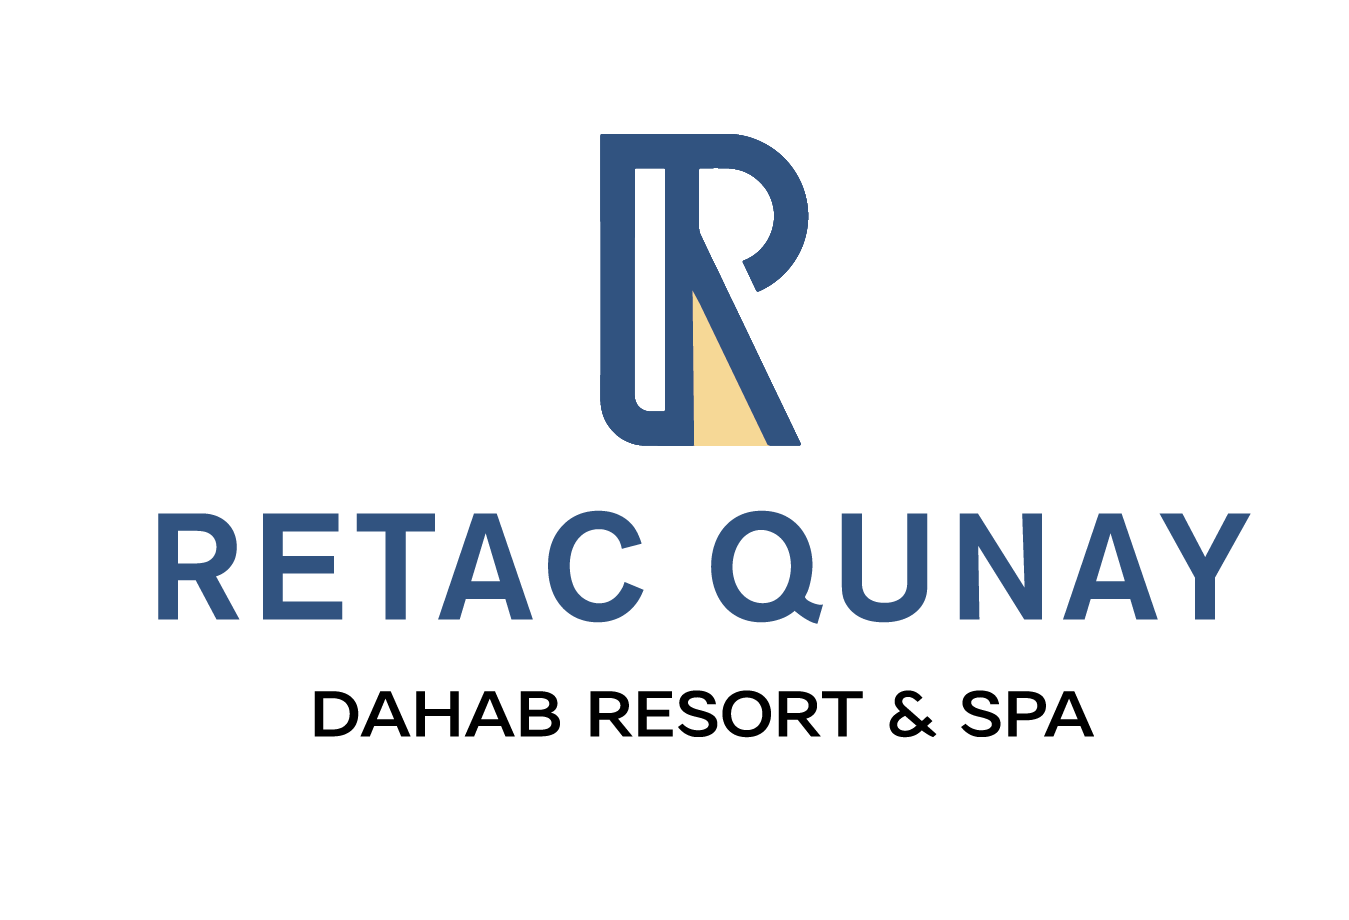 Retac Qunay Dahab Resort & SPA